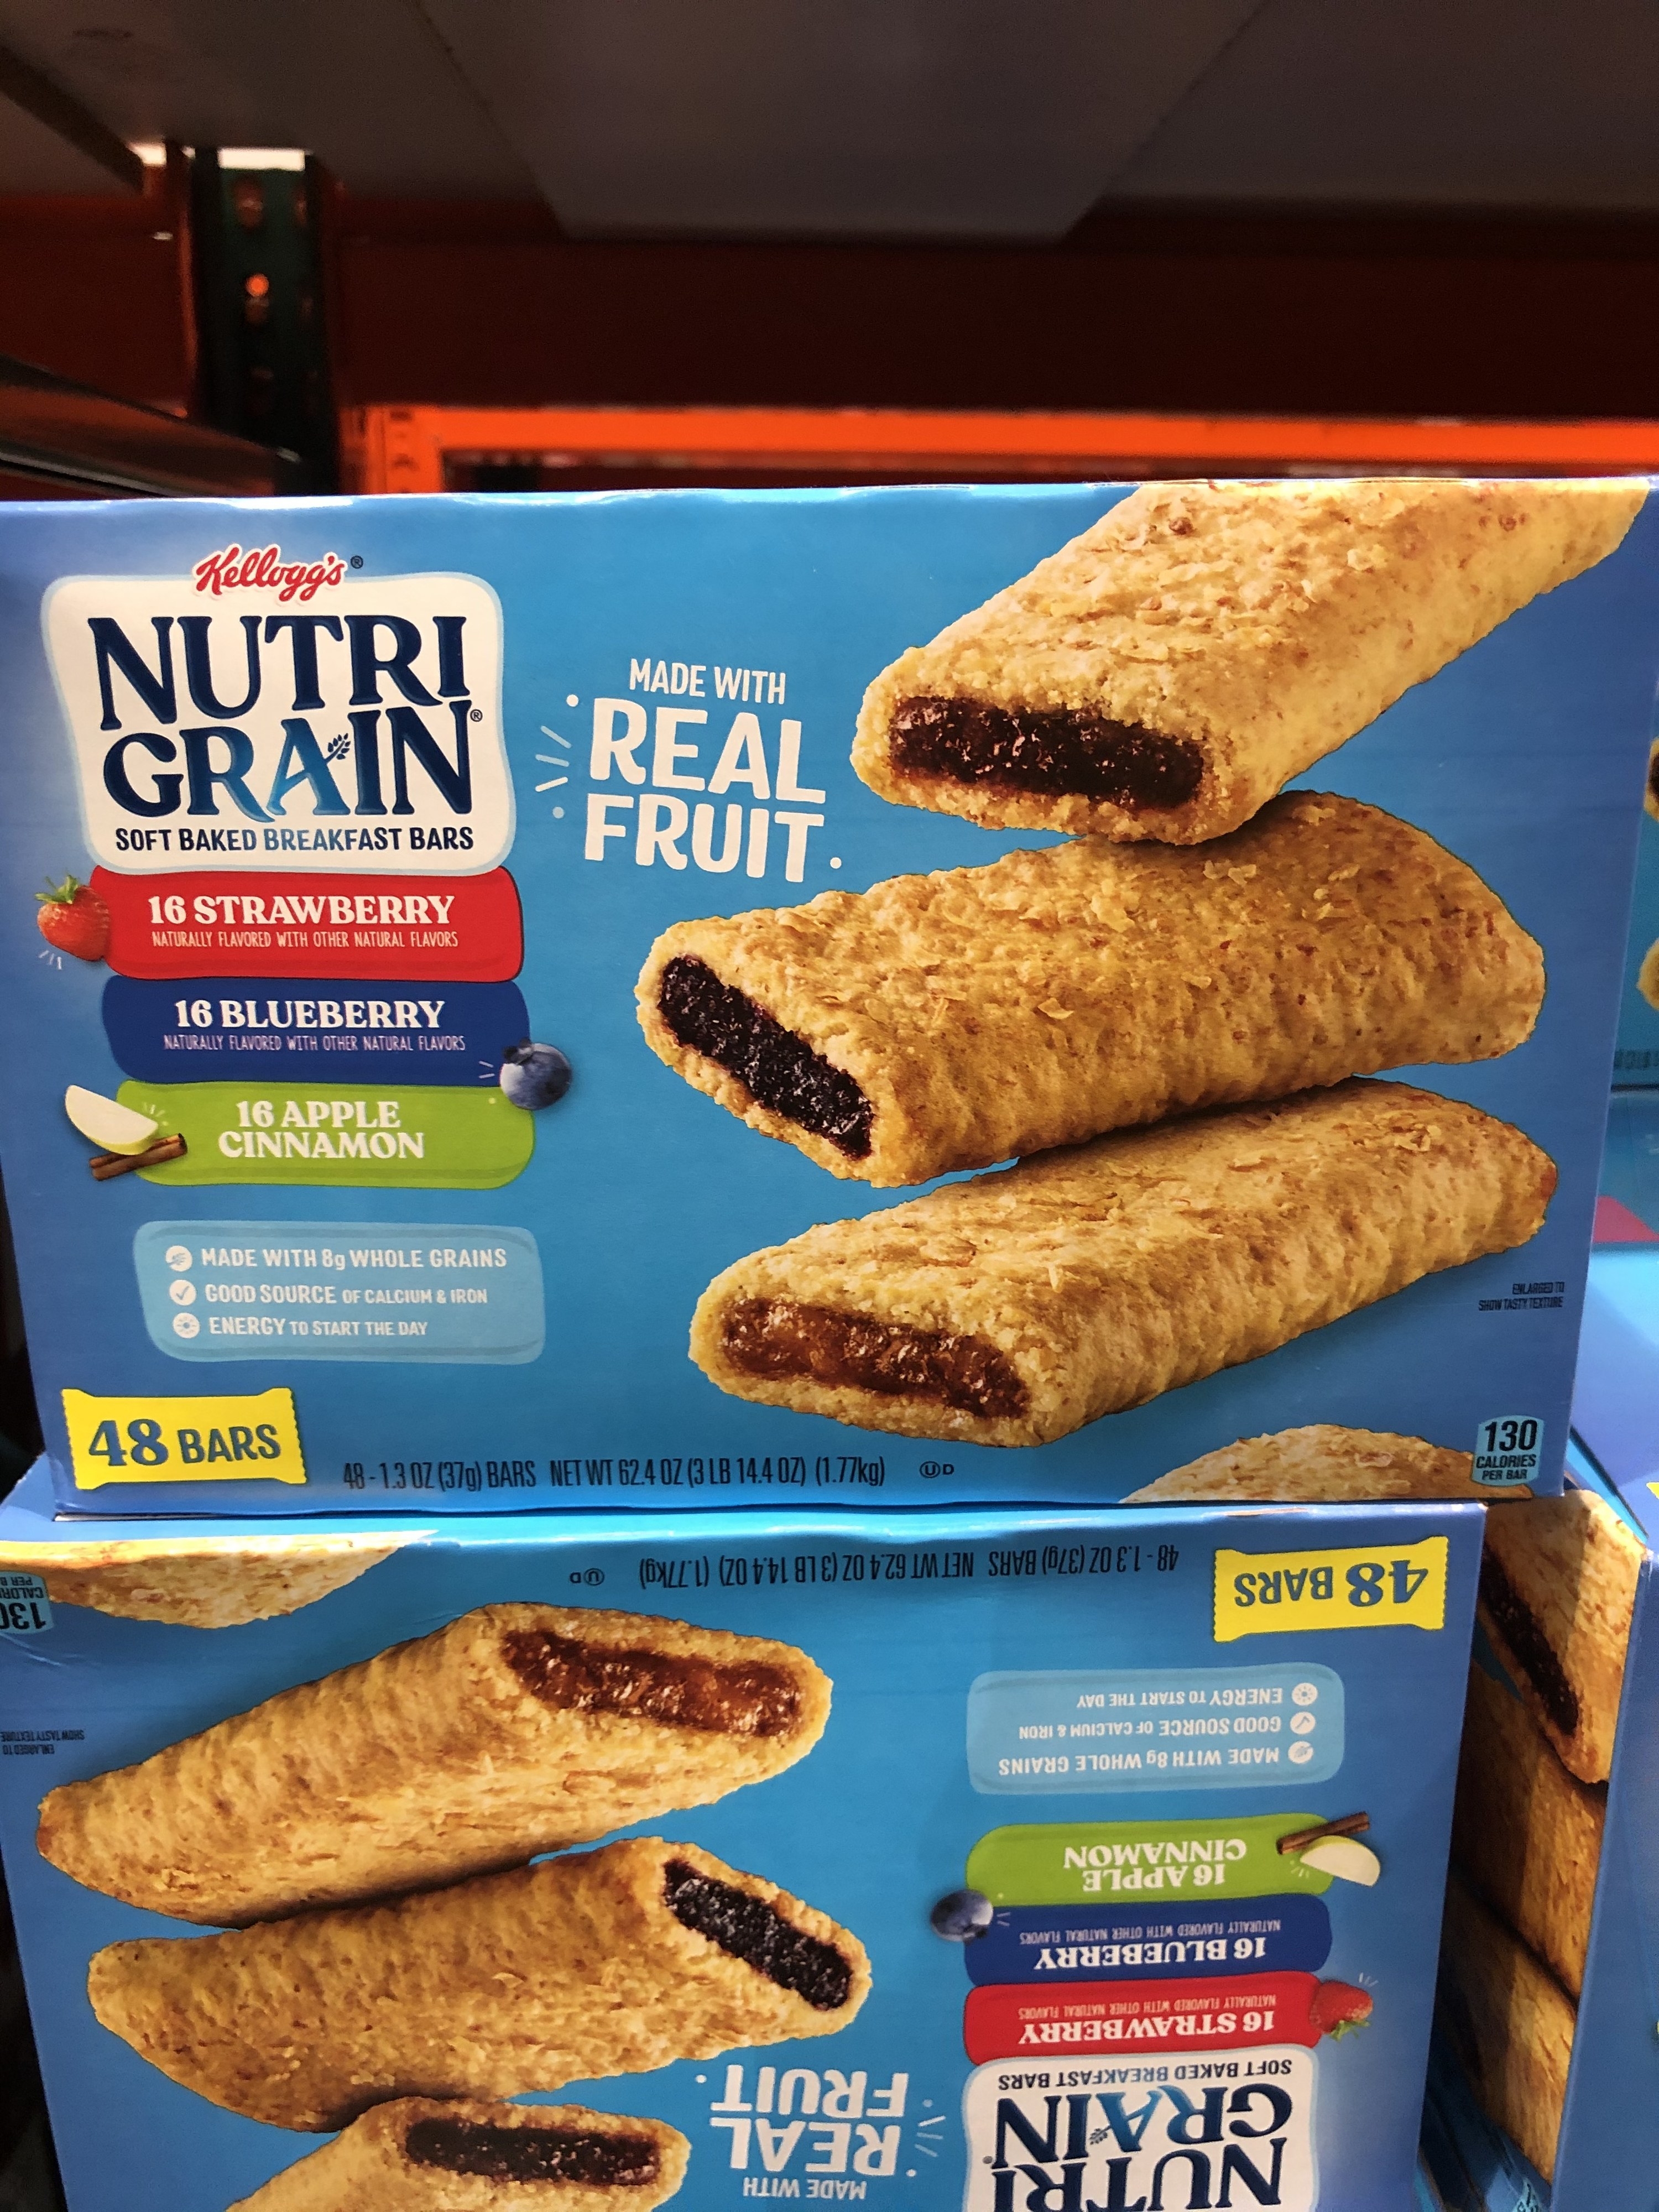 A box of Nutrigrain breakfast bars